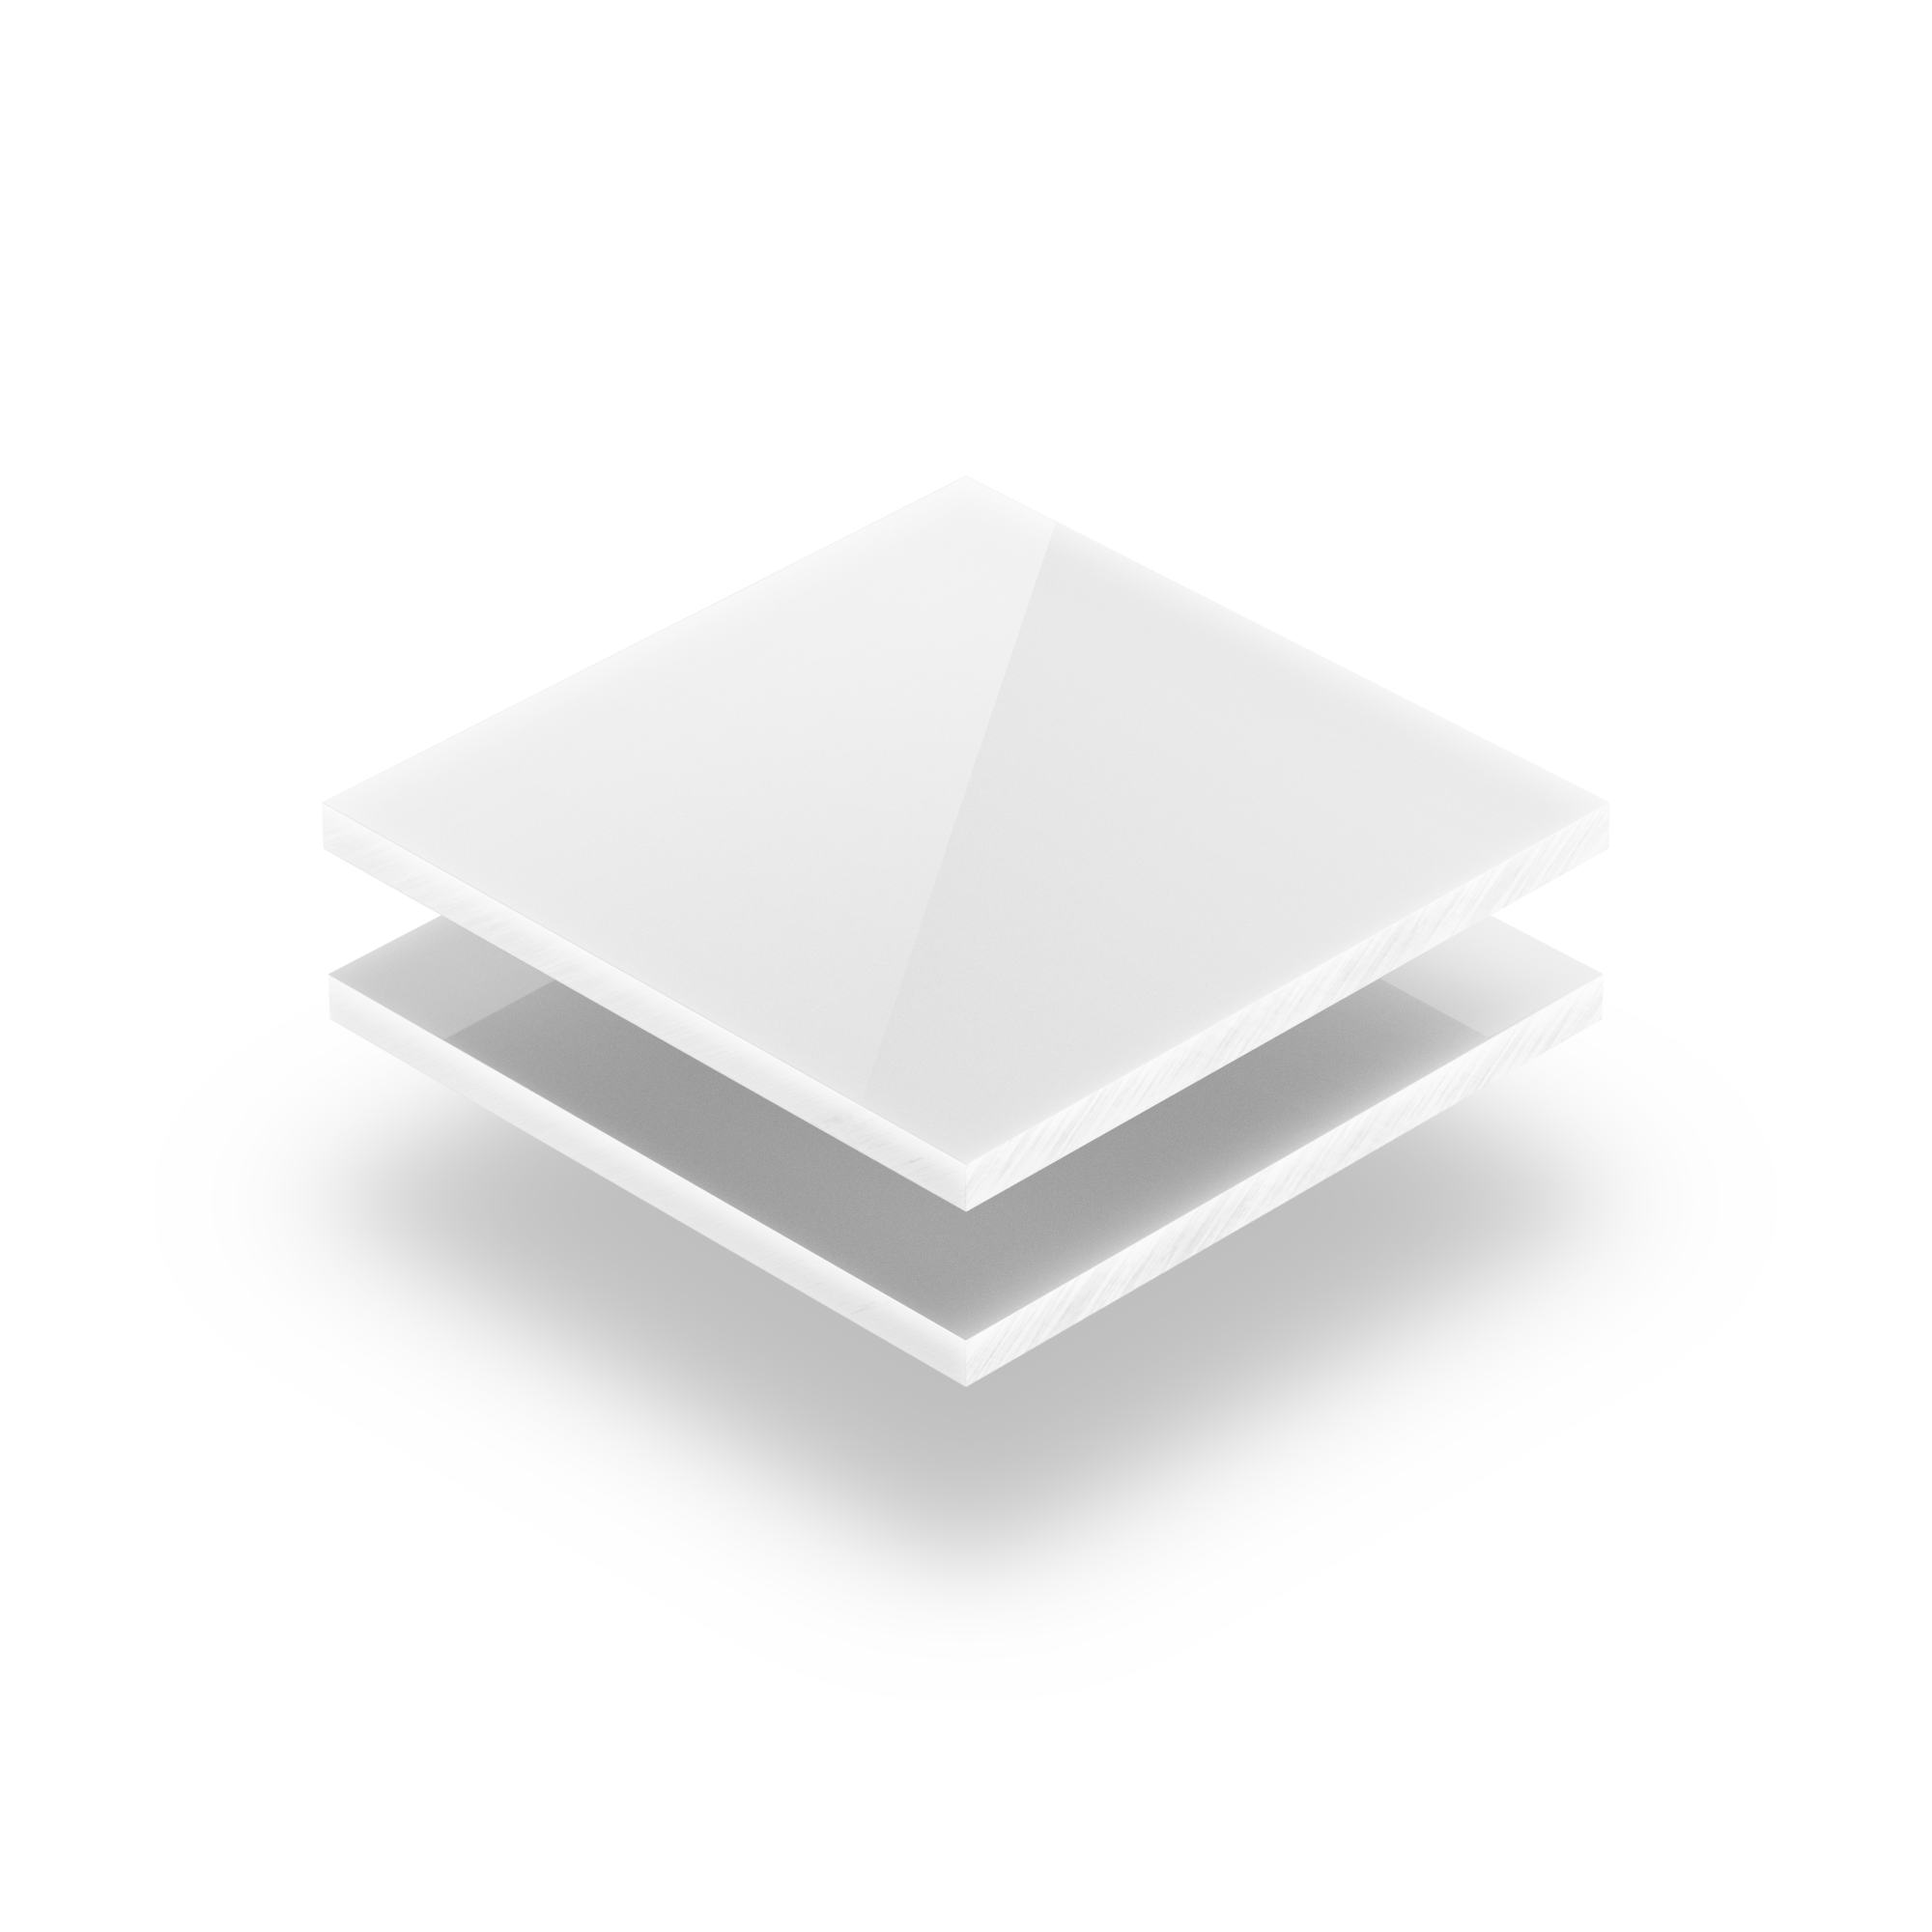  White  opal polycarbonate  sheet  3 mm Plasticsheetsshop co uk